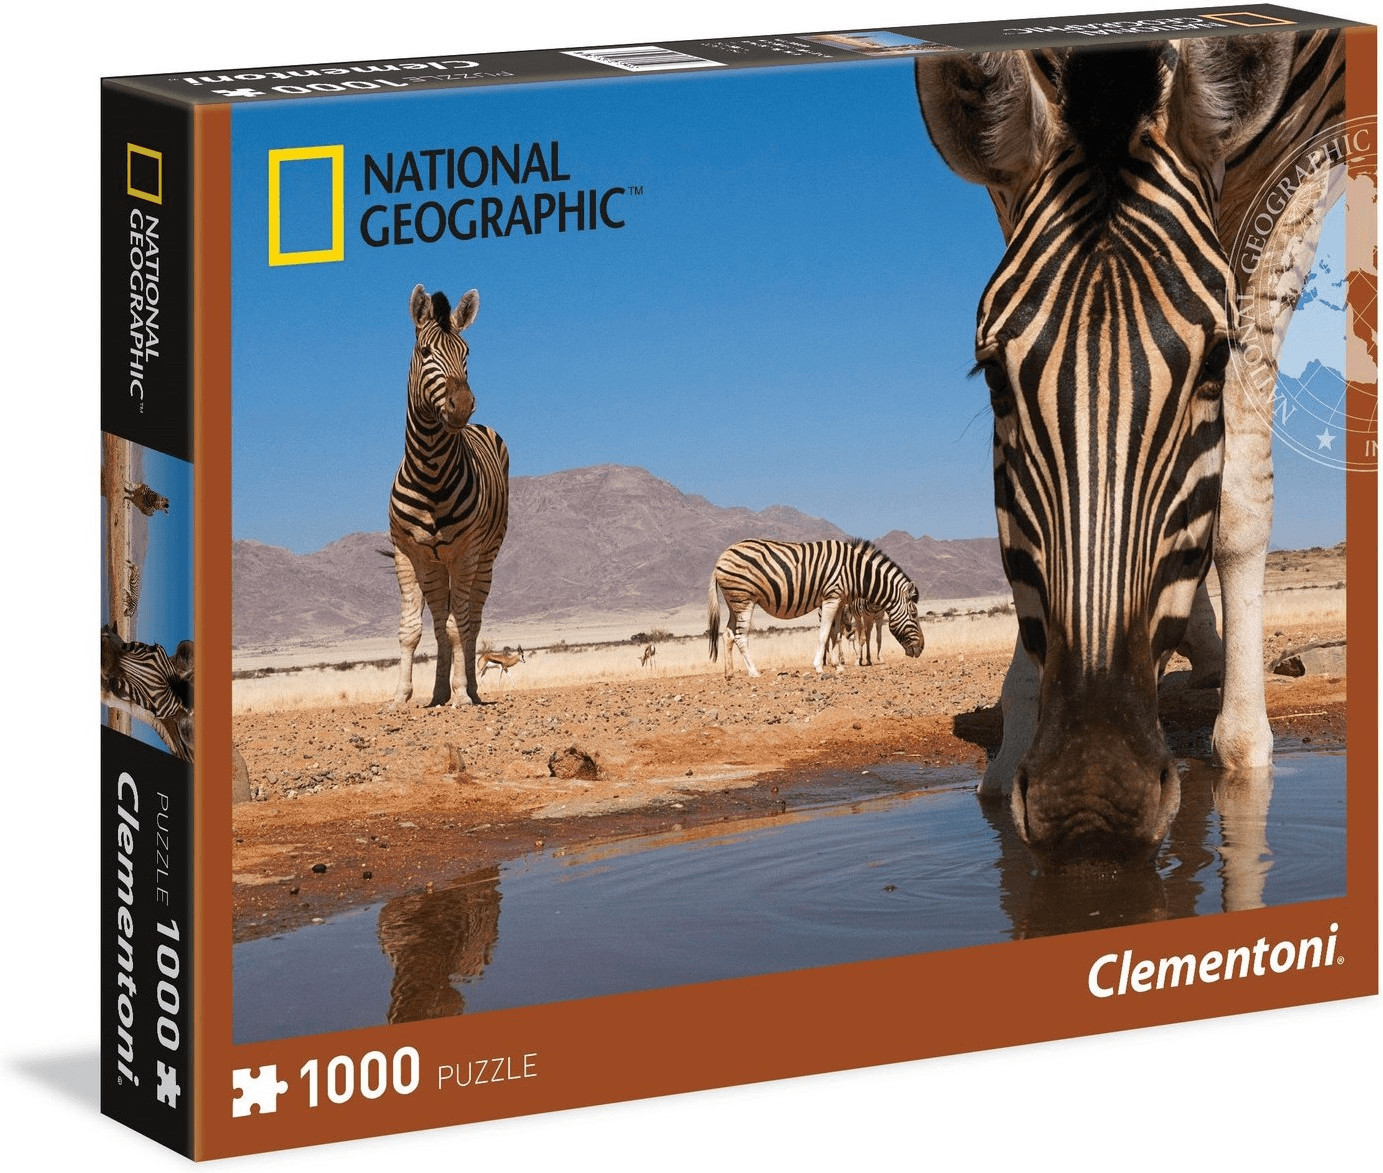 Clementoni National Geographic (39356)